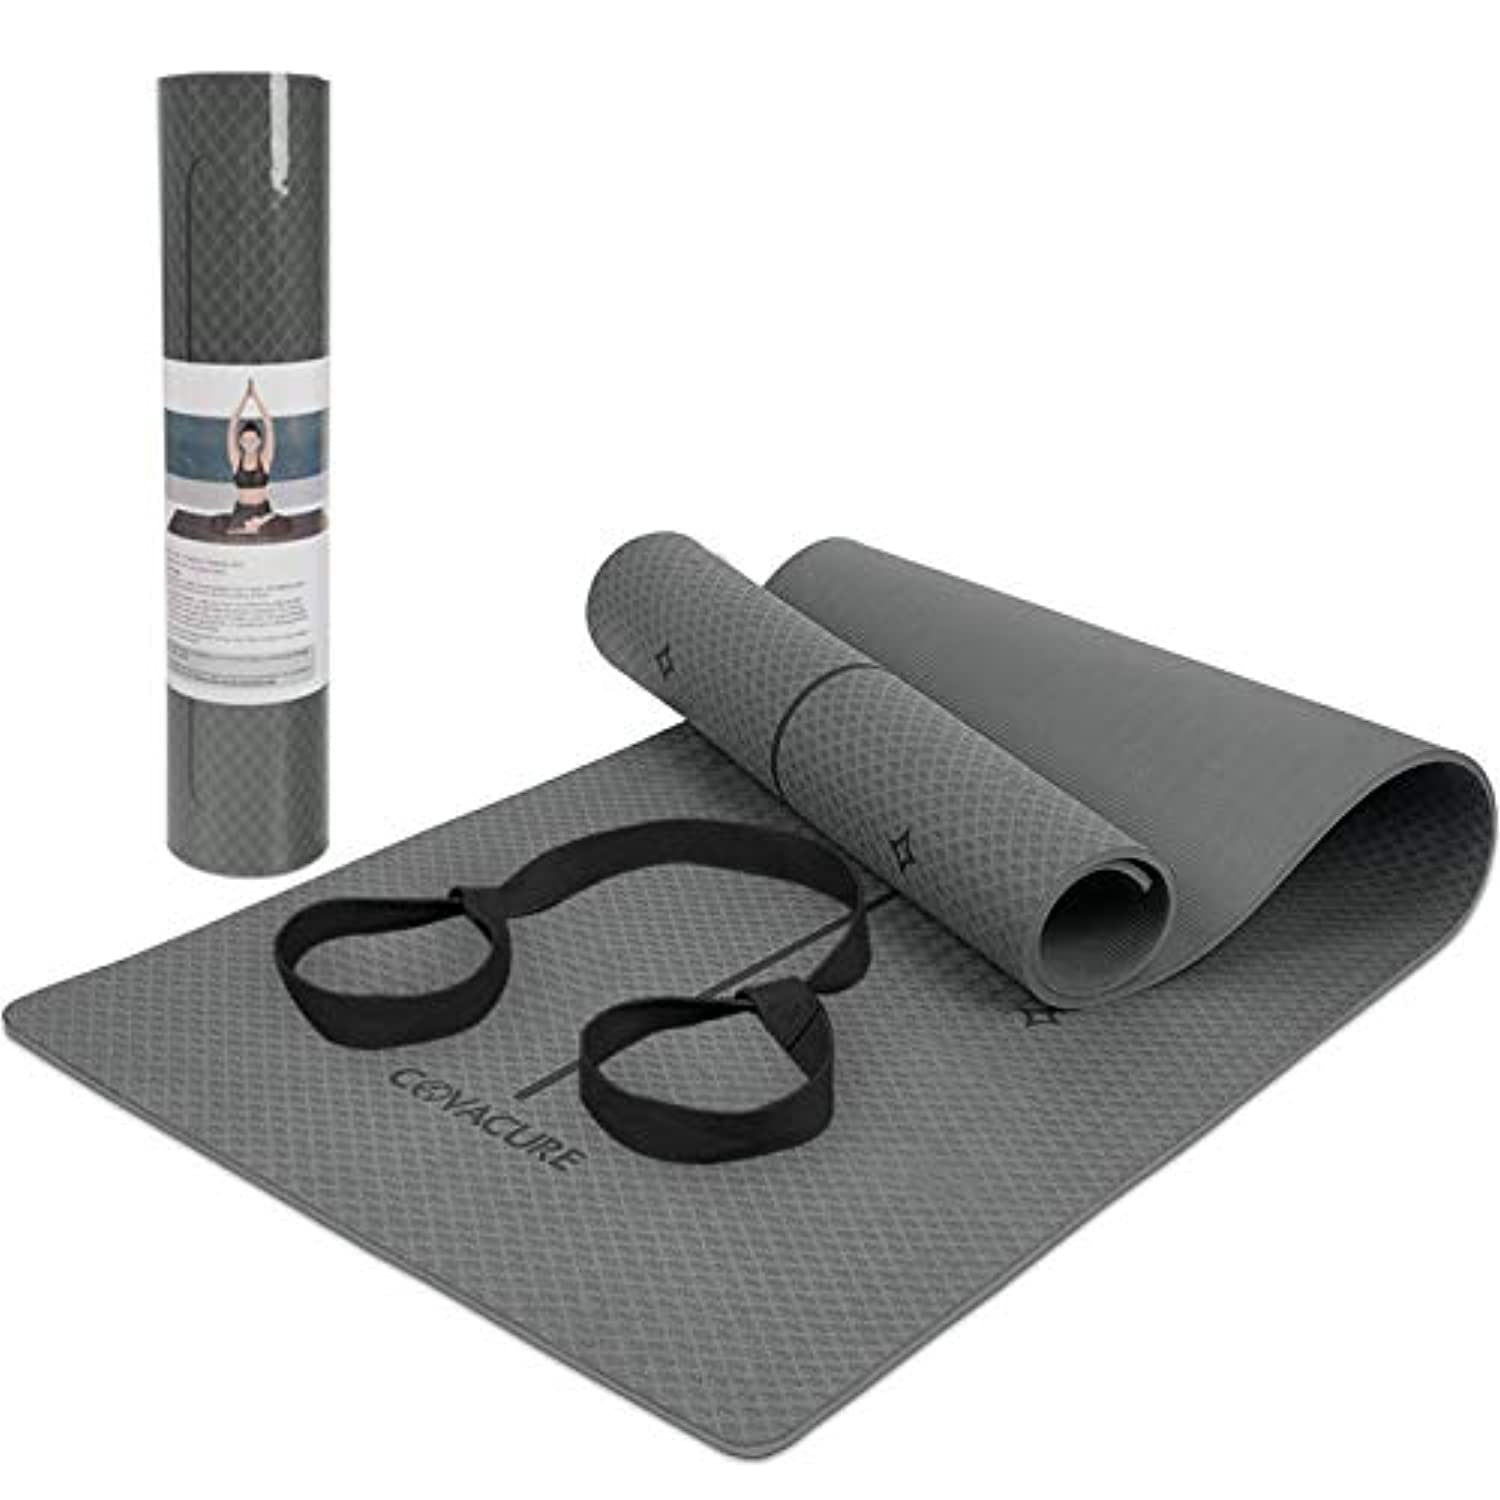 Sturdy And Skidproof Lululemon Yoga Mat For Training 